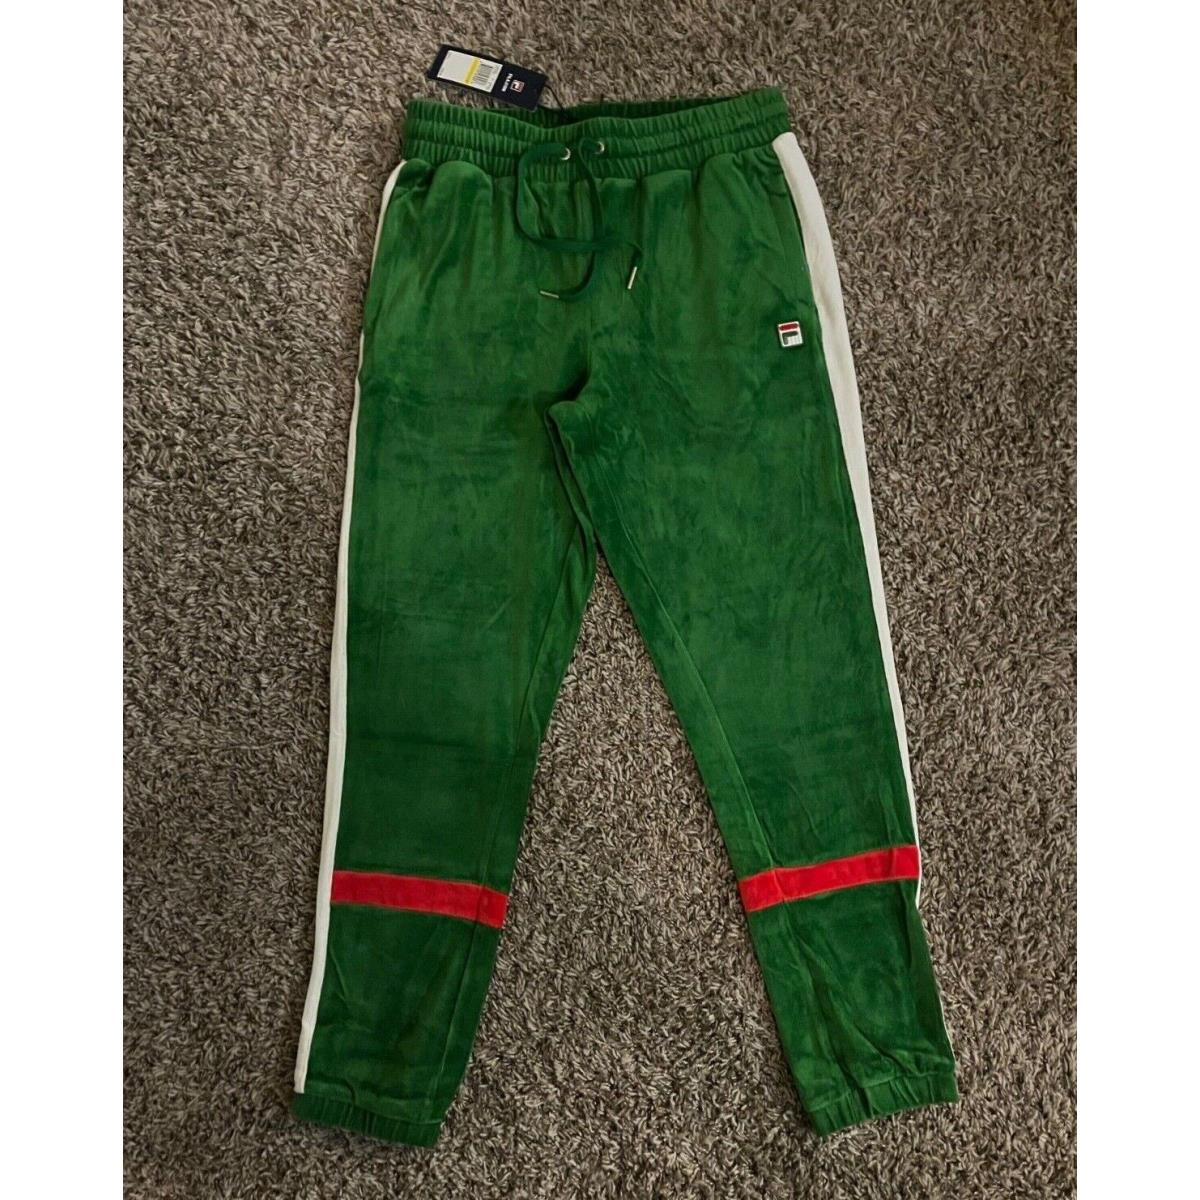 Fila clothing  - Green 7